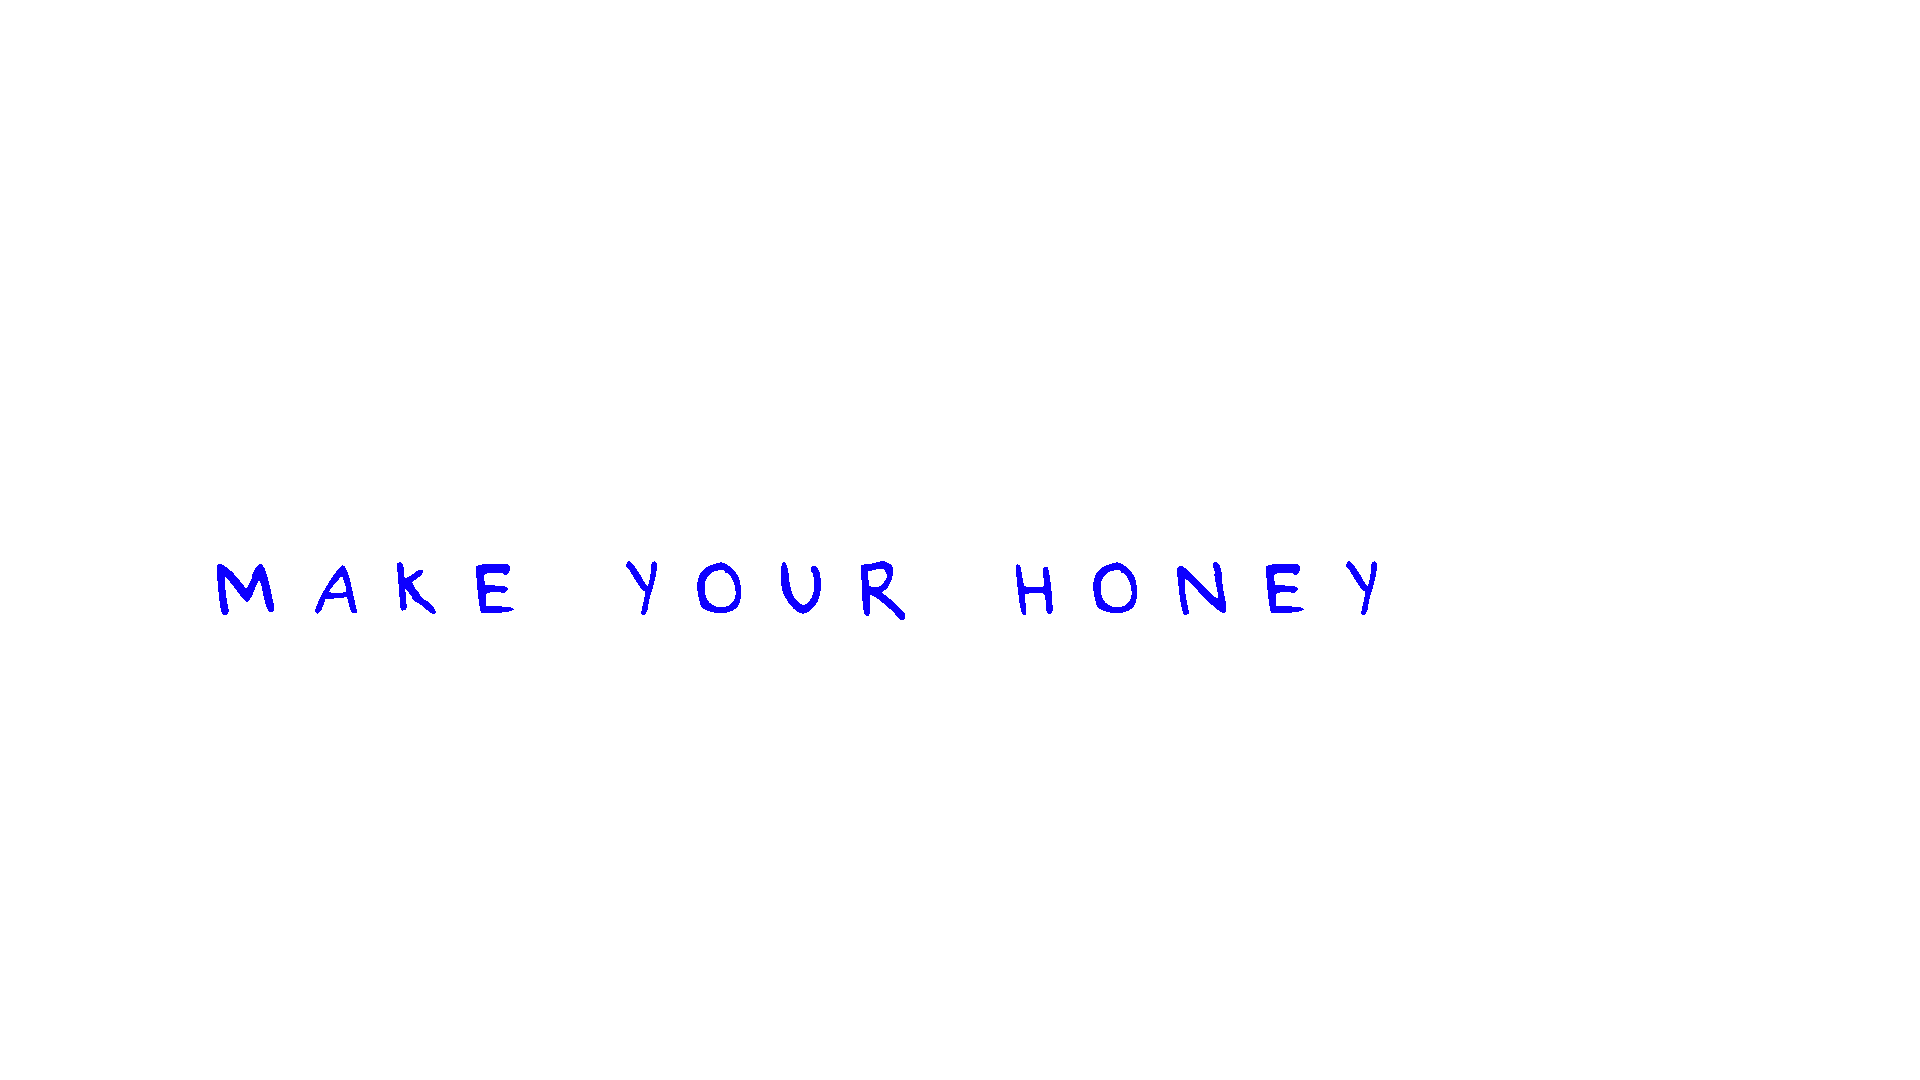 Bridge 4: Make Your Honey